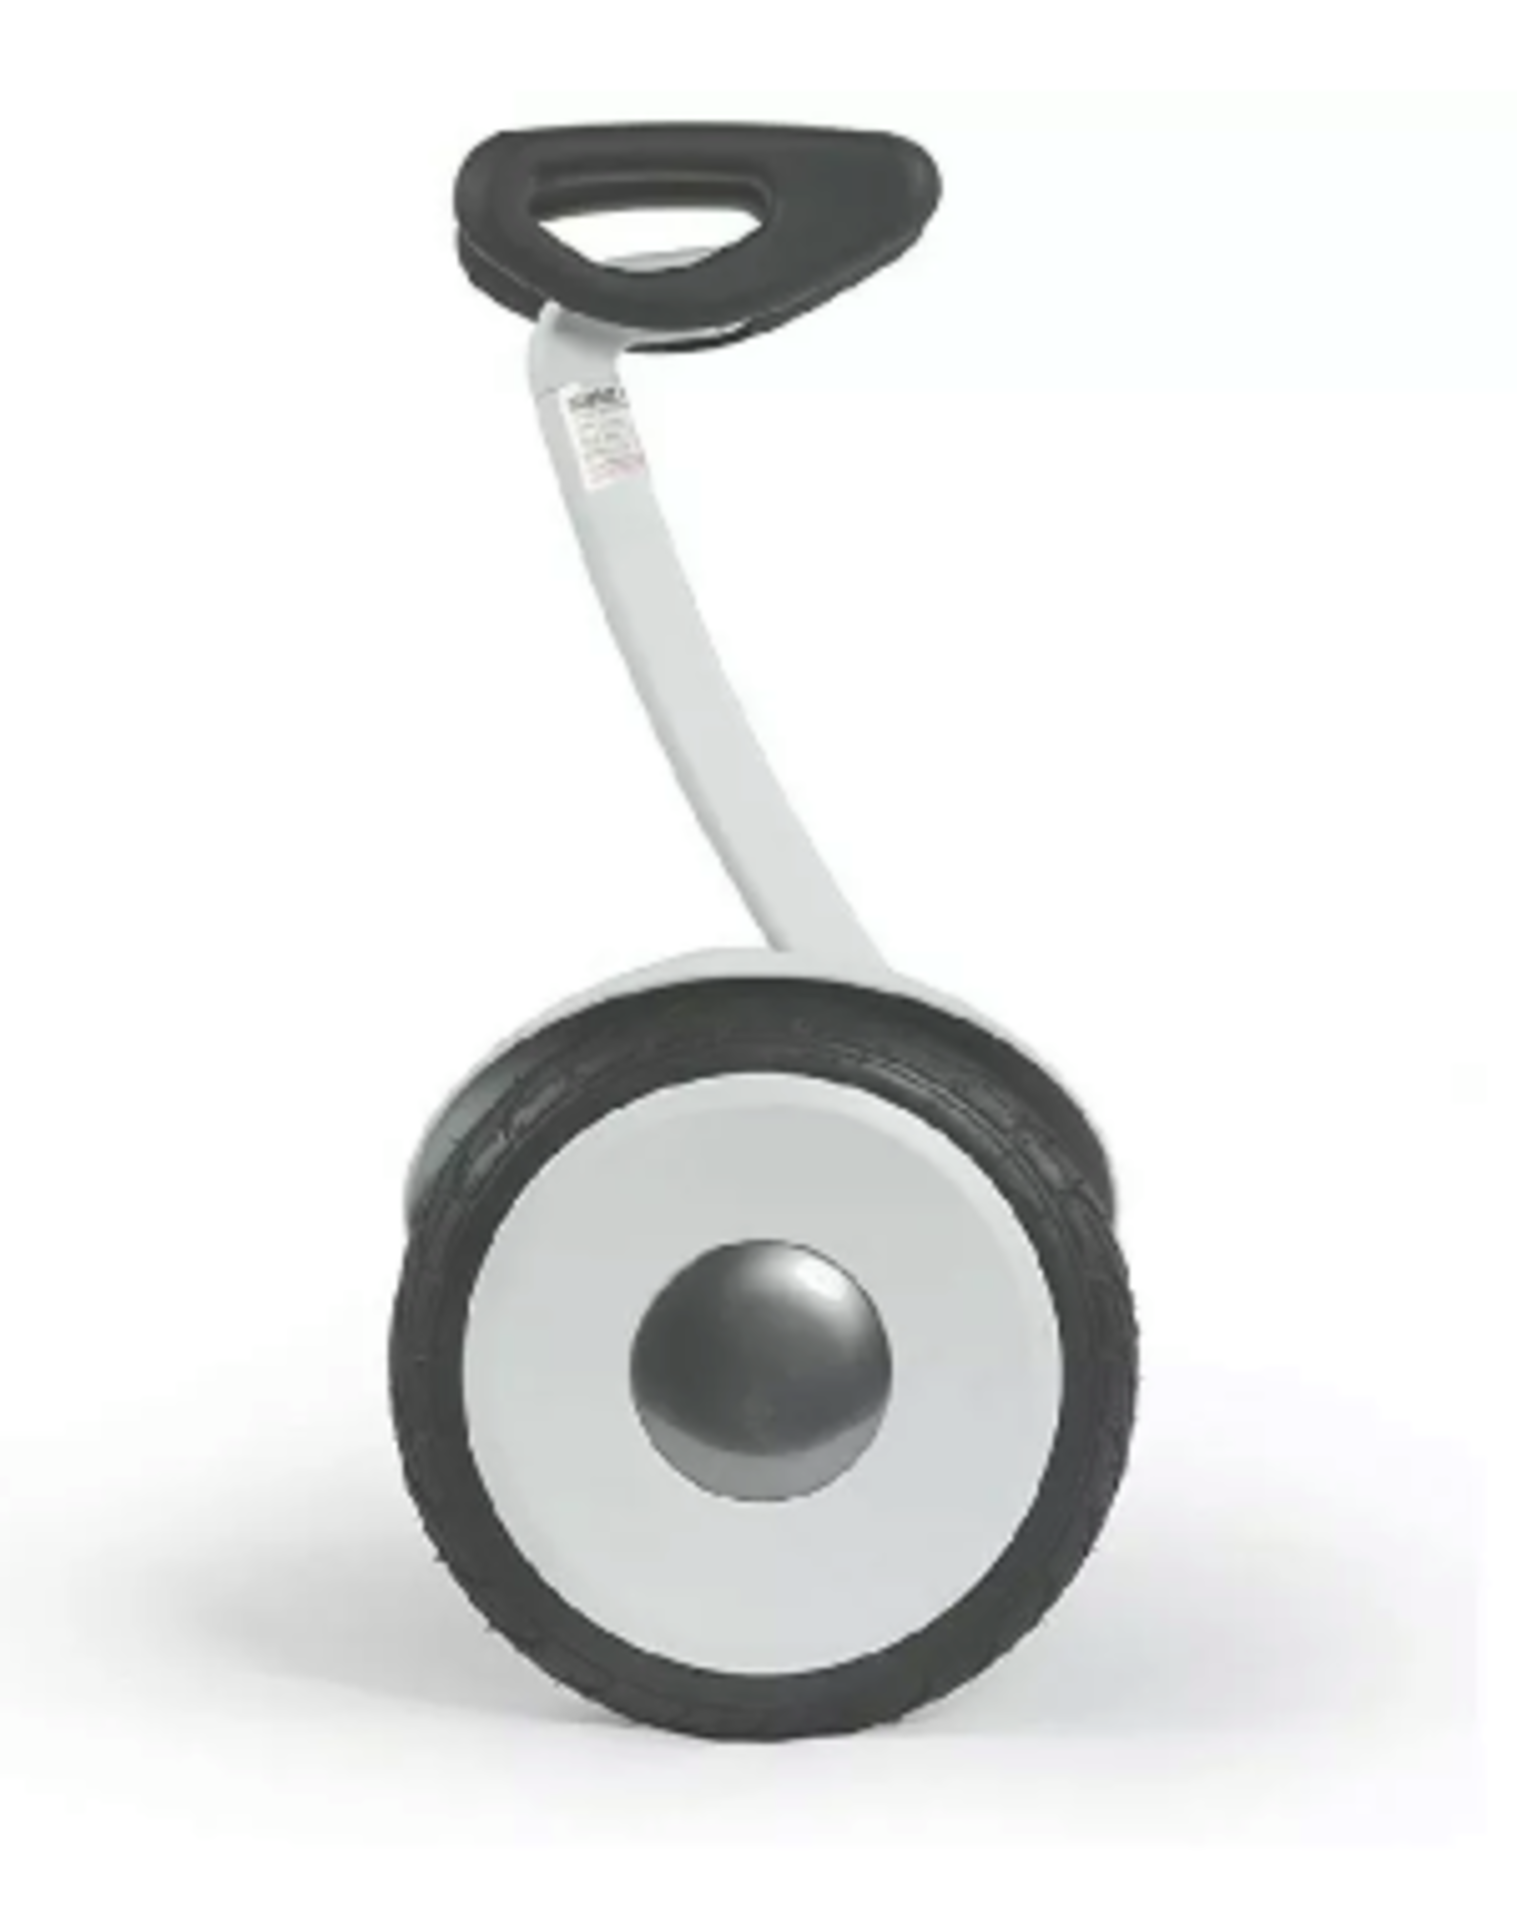 Segway Ninebot S Smart Self-Balancing Electric Transporter - Brand New - Image 3 of 4